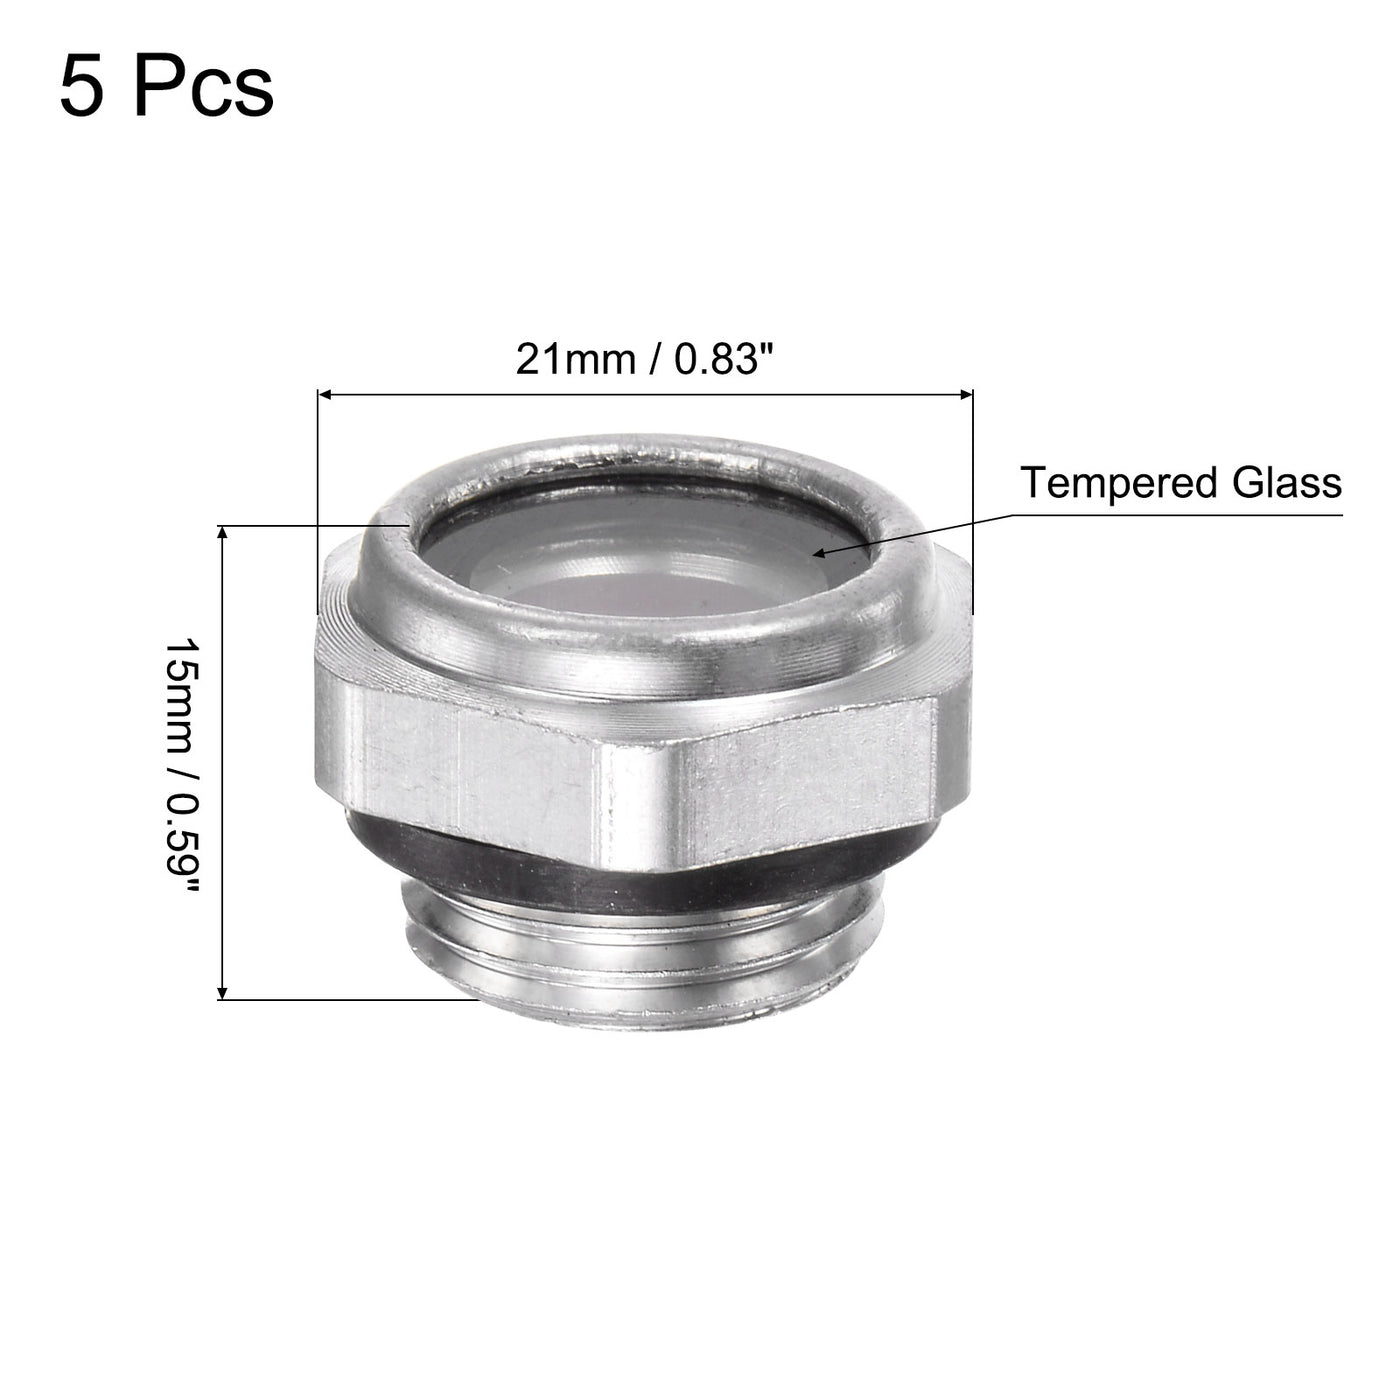 Uxcell Uxcell Air Compressor Oil Level Gauge Sight Glass M33x1.5mm Male Thread Aluminum 5Pcs